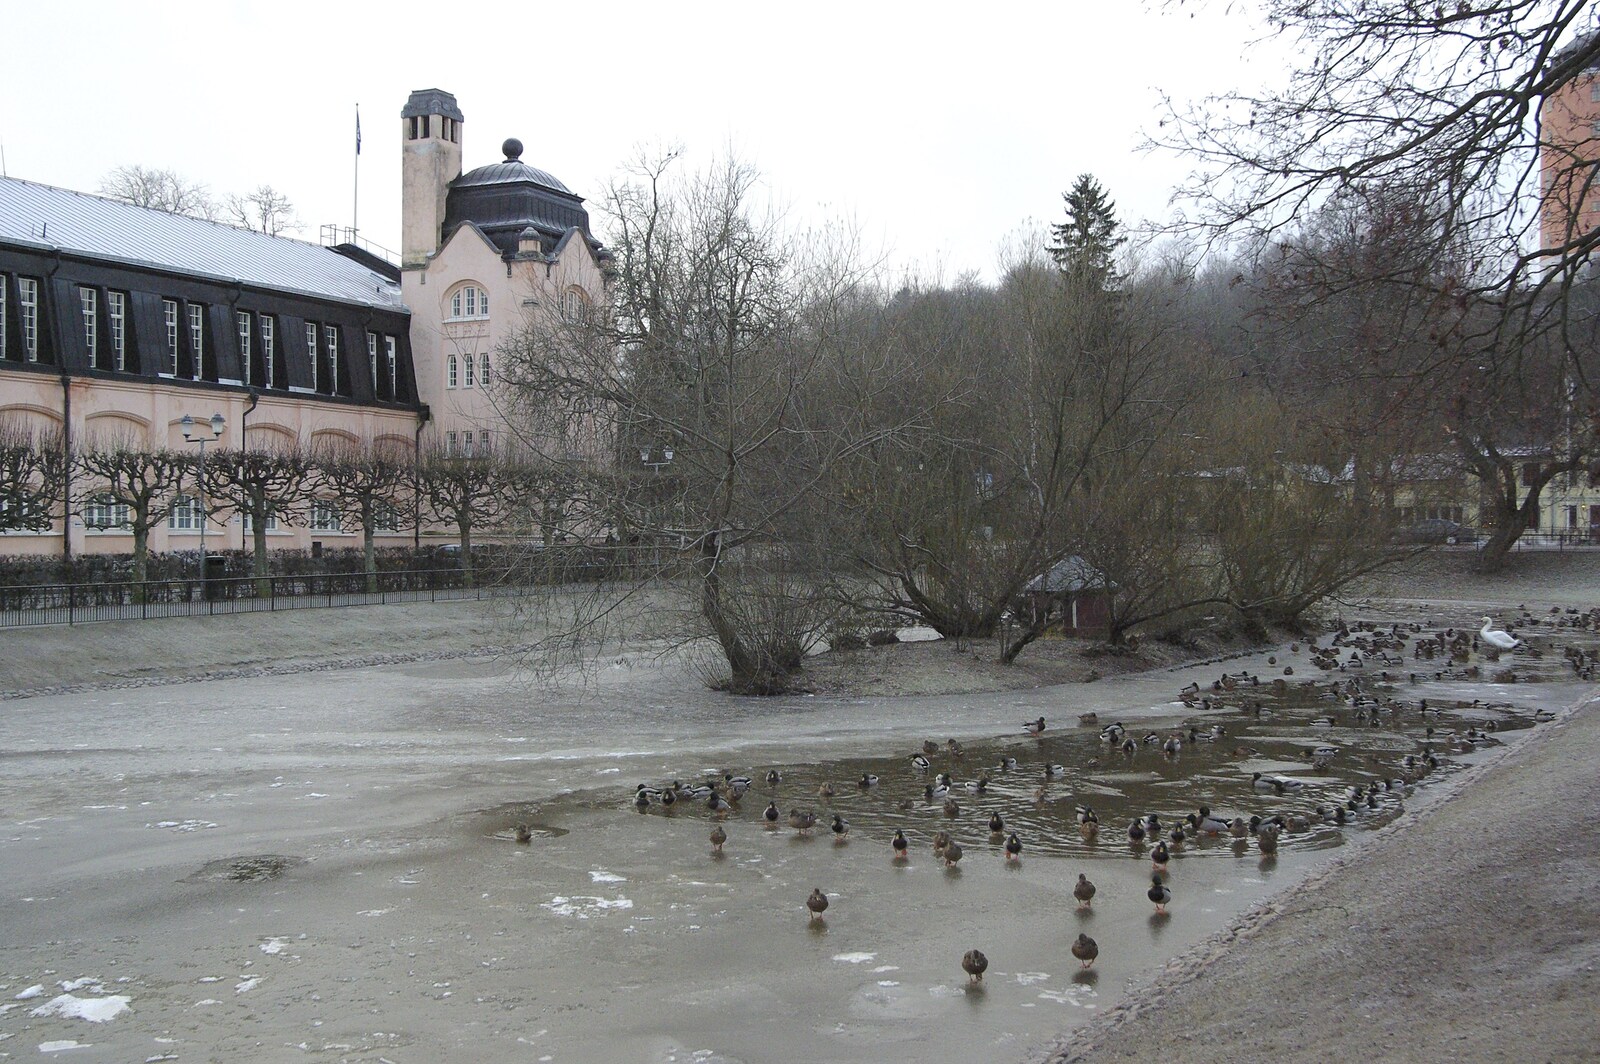 A frozen river from Gamla Uppsala, Uppsala County, Sweden - 16th December 2007